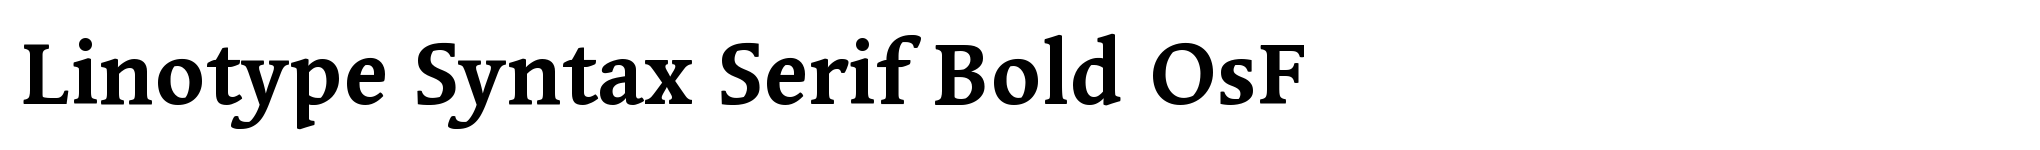 Linotype Syntax Serif Bold OsF image